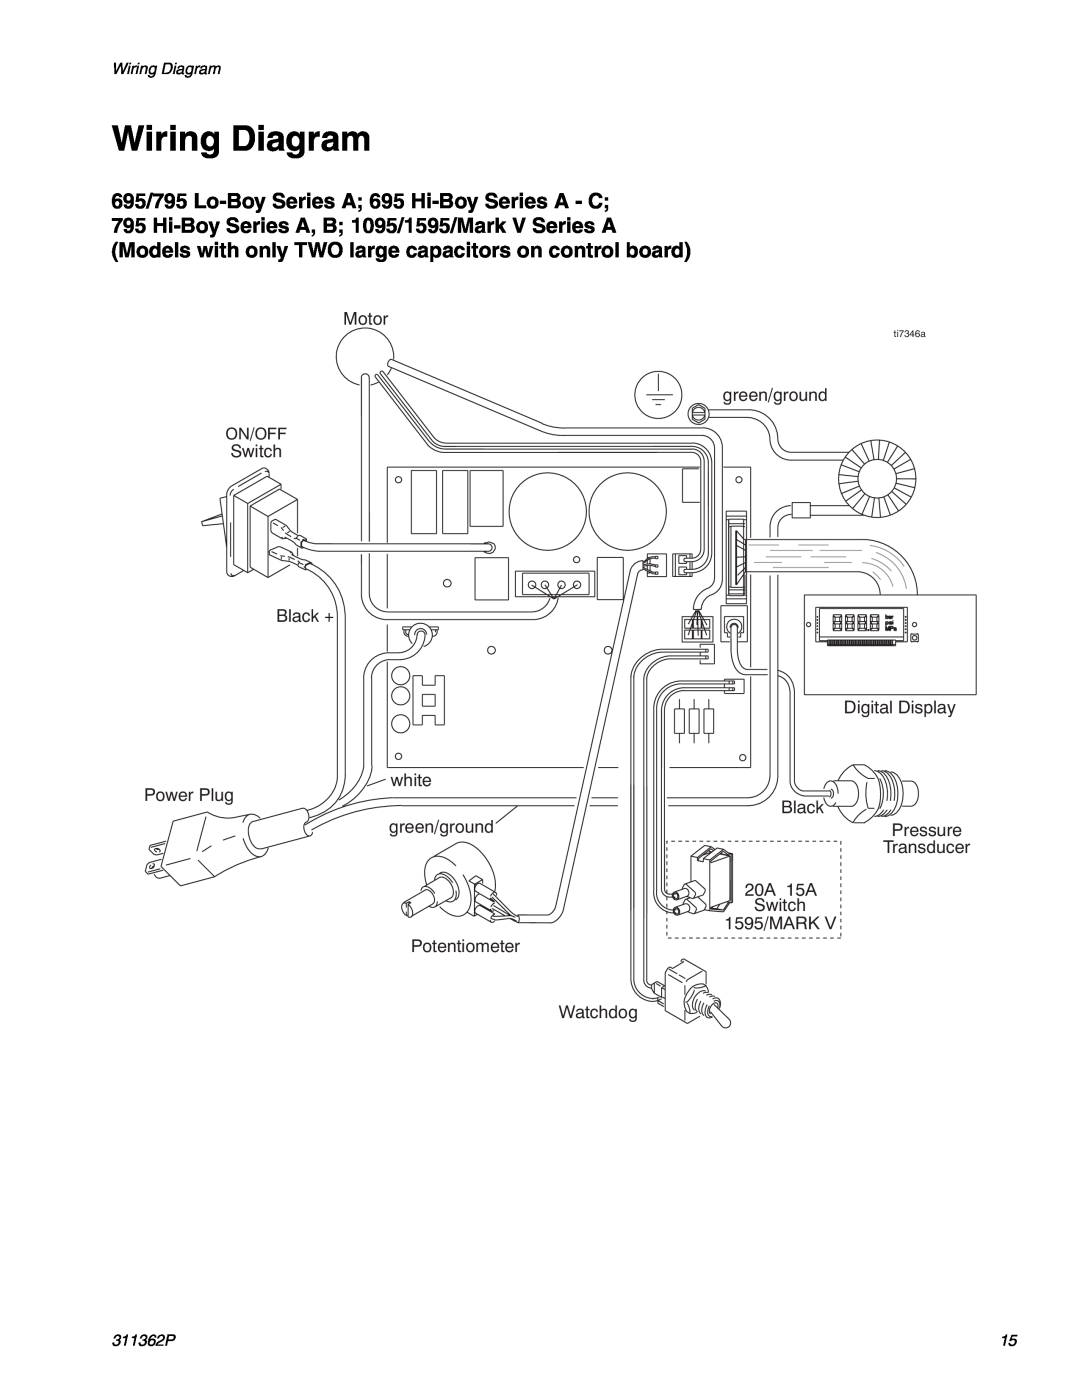 Graco Inc Wiring Diagram, 695/795 Lo-Boy Series A 695 Hi-Boy Series A - C, Motor, 1595/MARK, On/Off, 311362P, ti7346a 